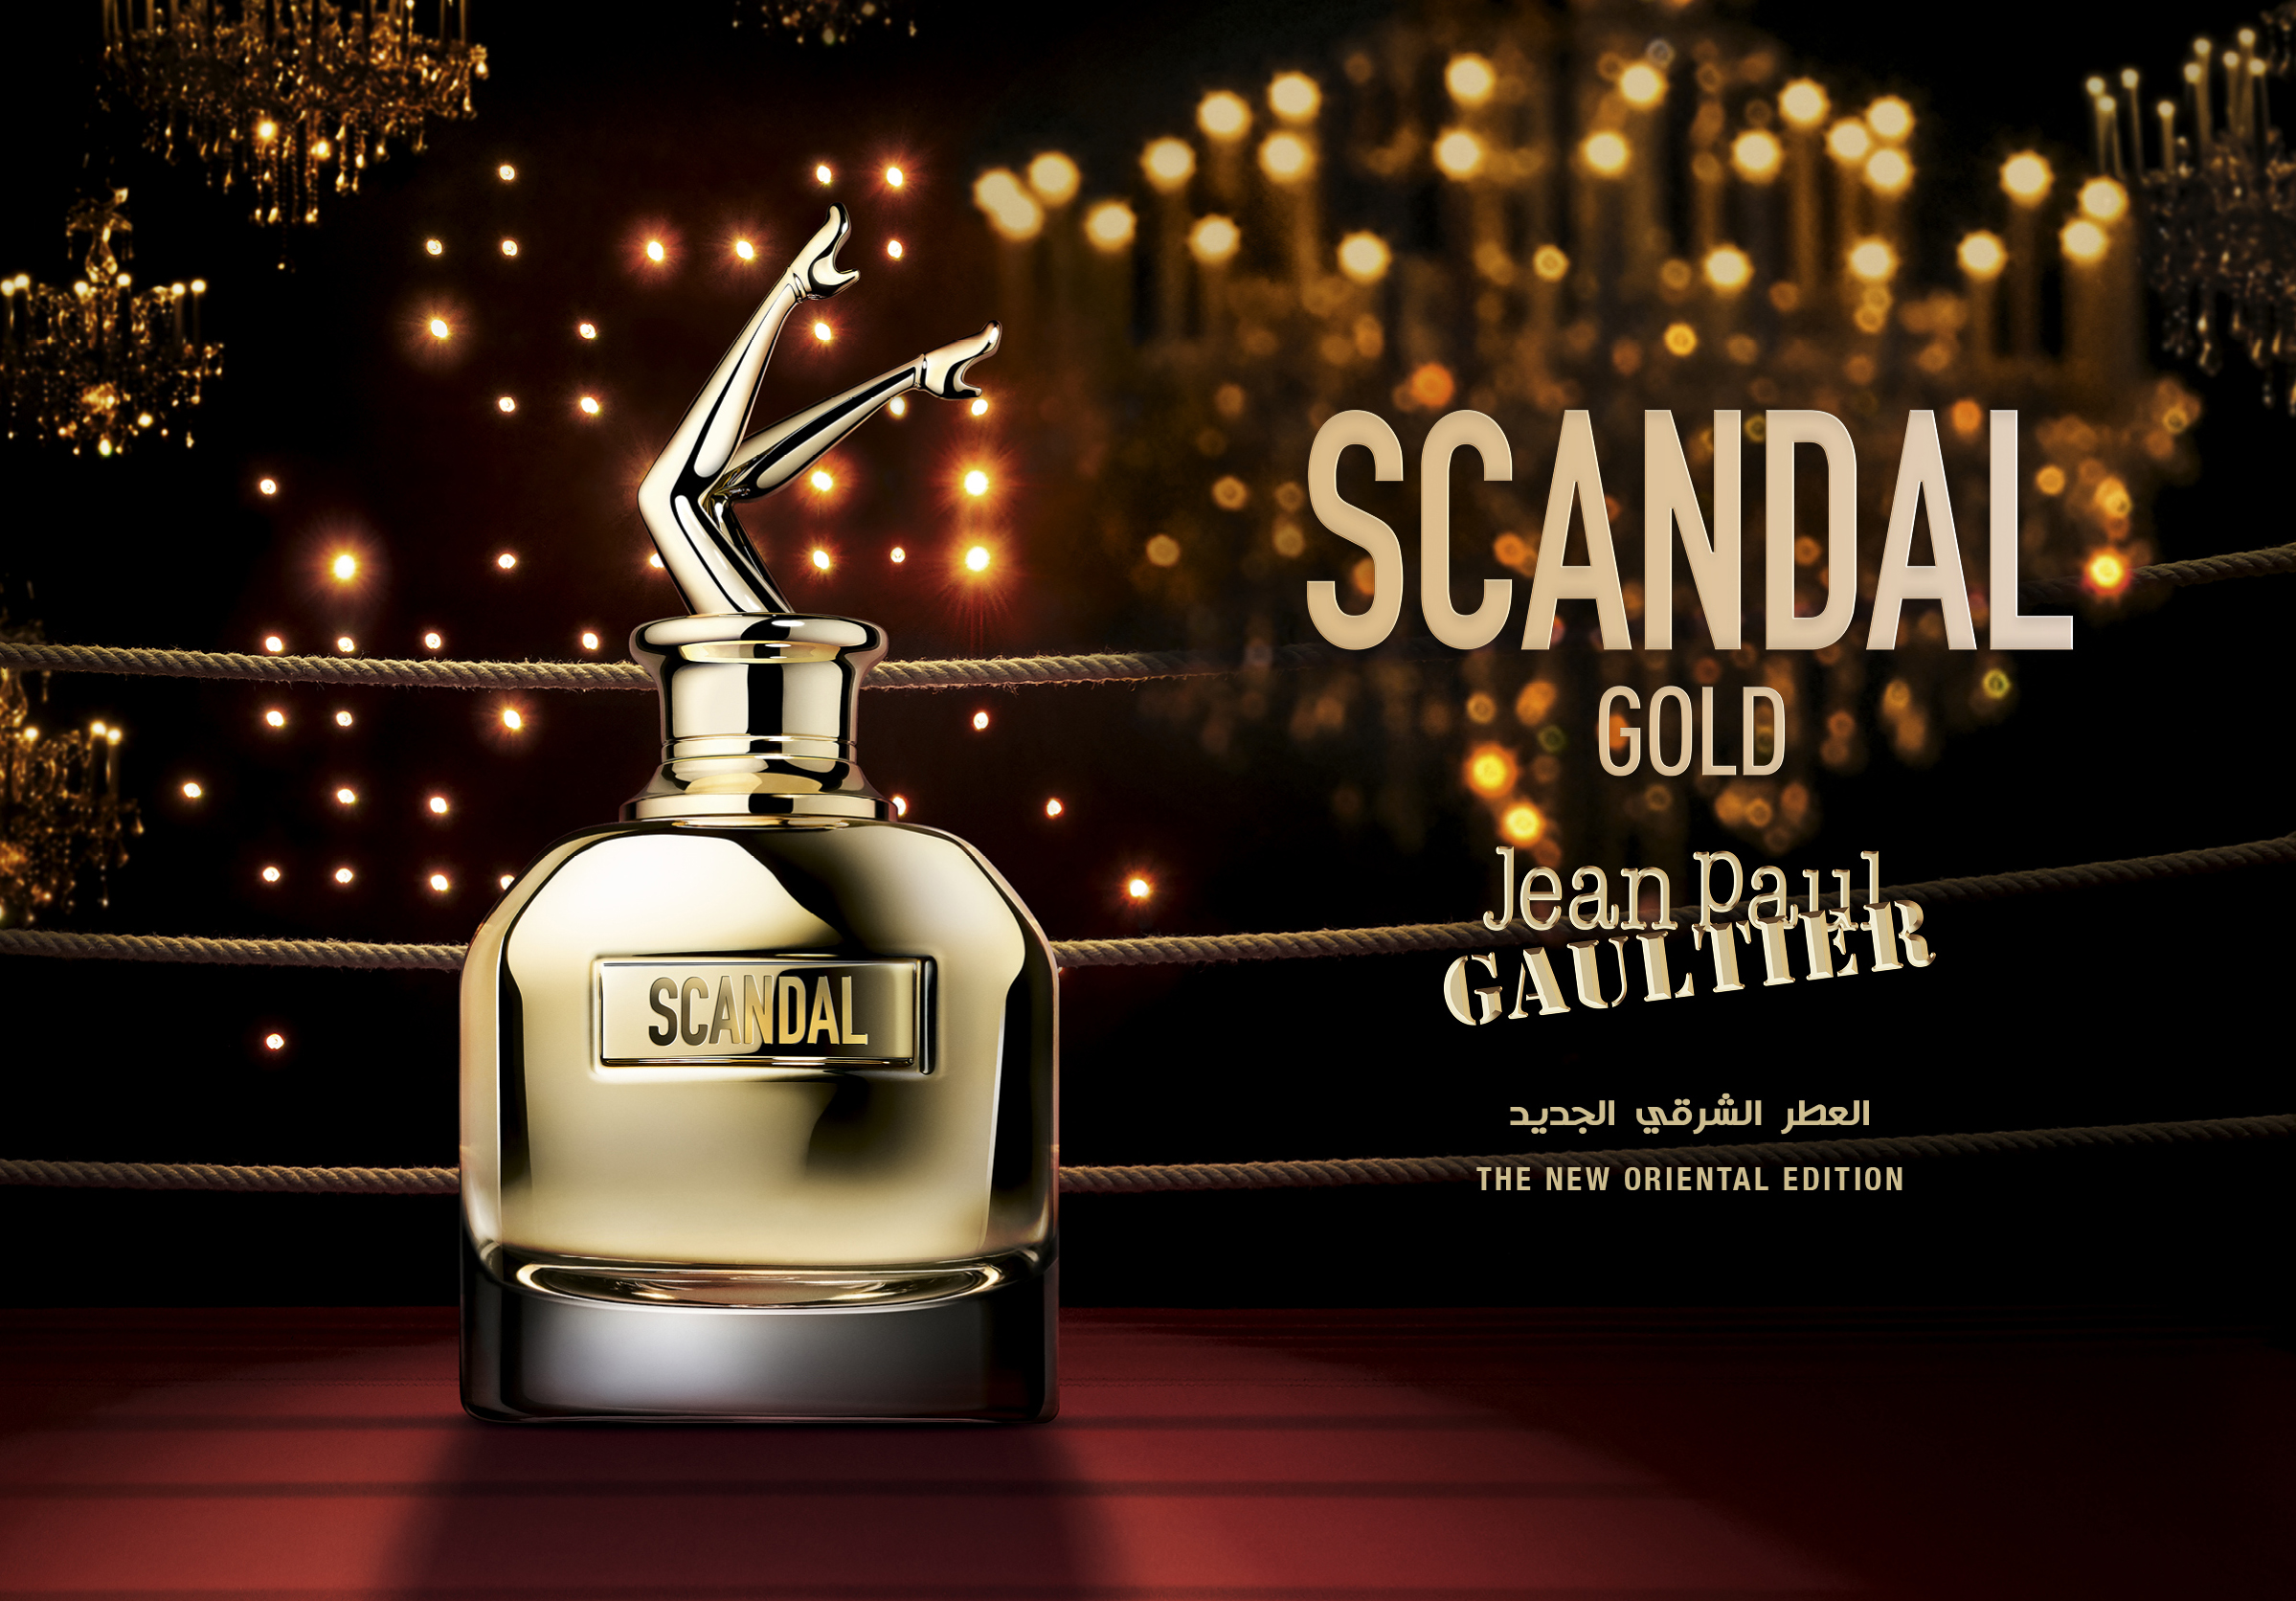 Jean Paul Gaultier Scandal Gold Novas fragrâncias